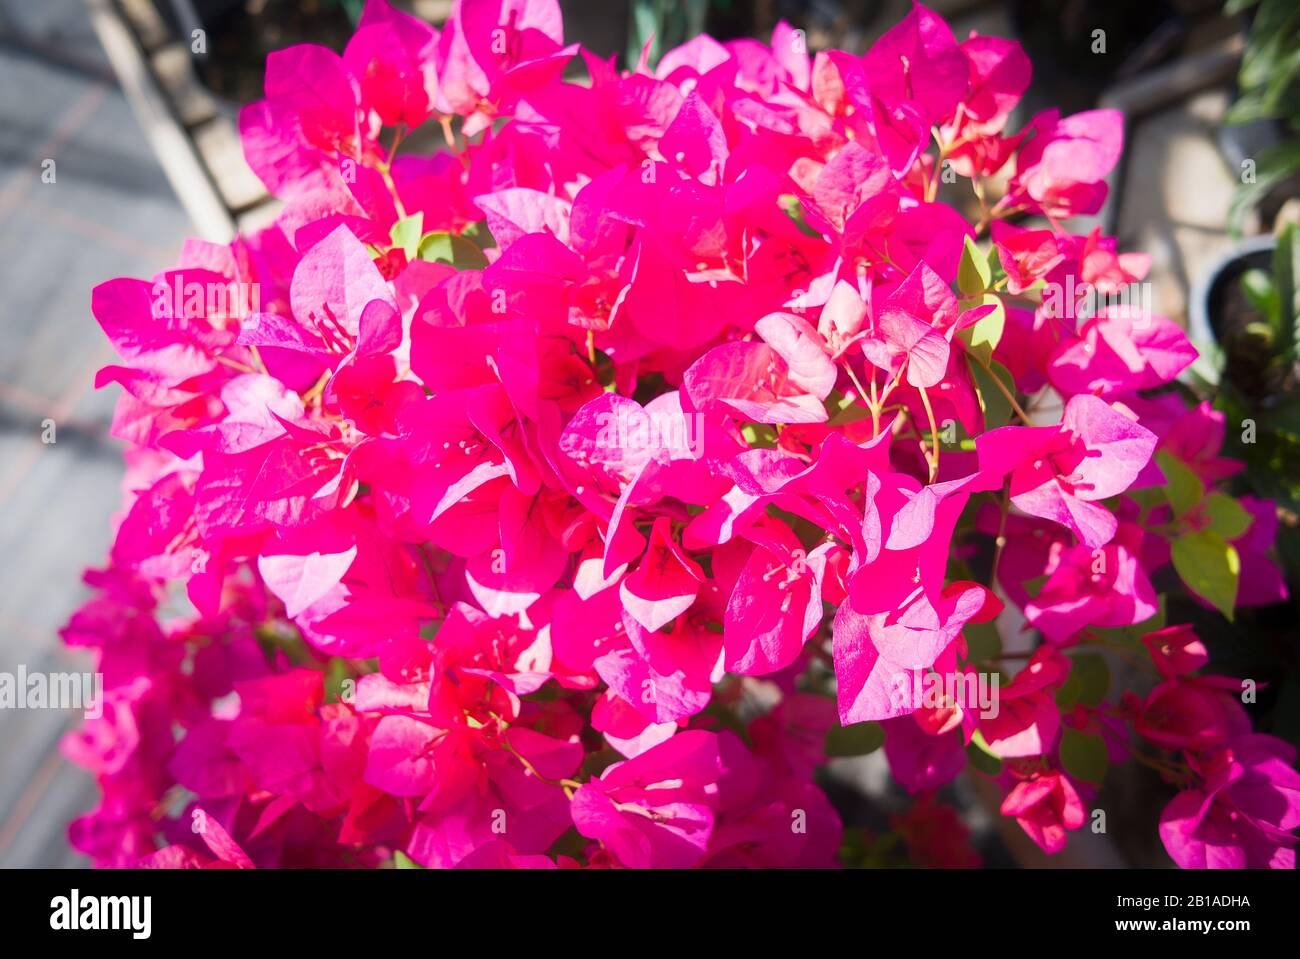 Brilliant Magenta Pink Bracts Of Bougainvillea Barbara Karst In An English Nursery Display Stock Photo Alamy